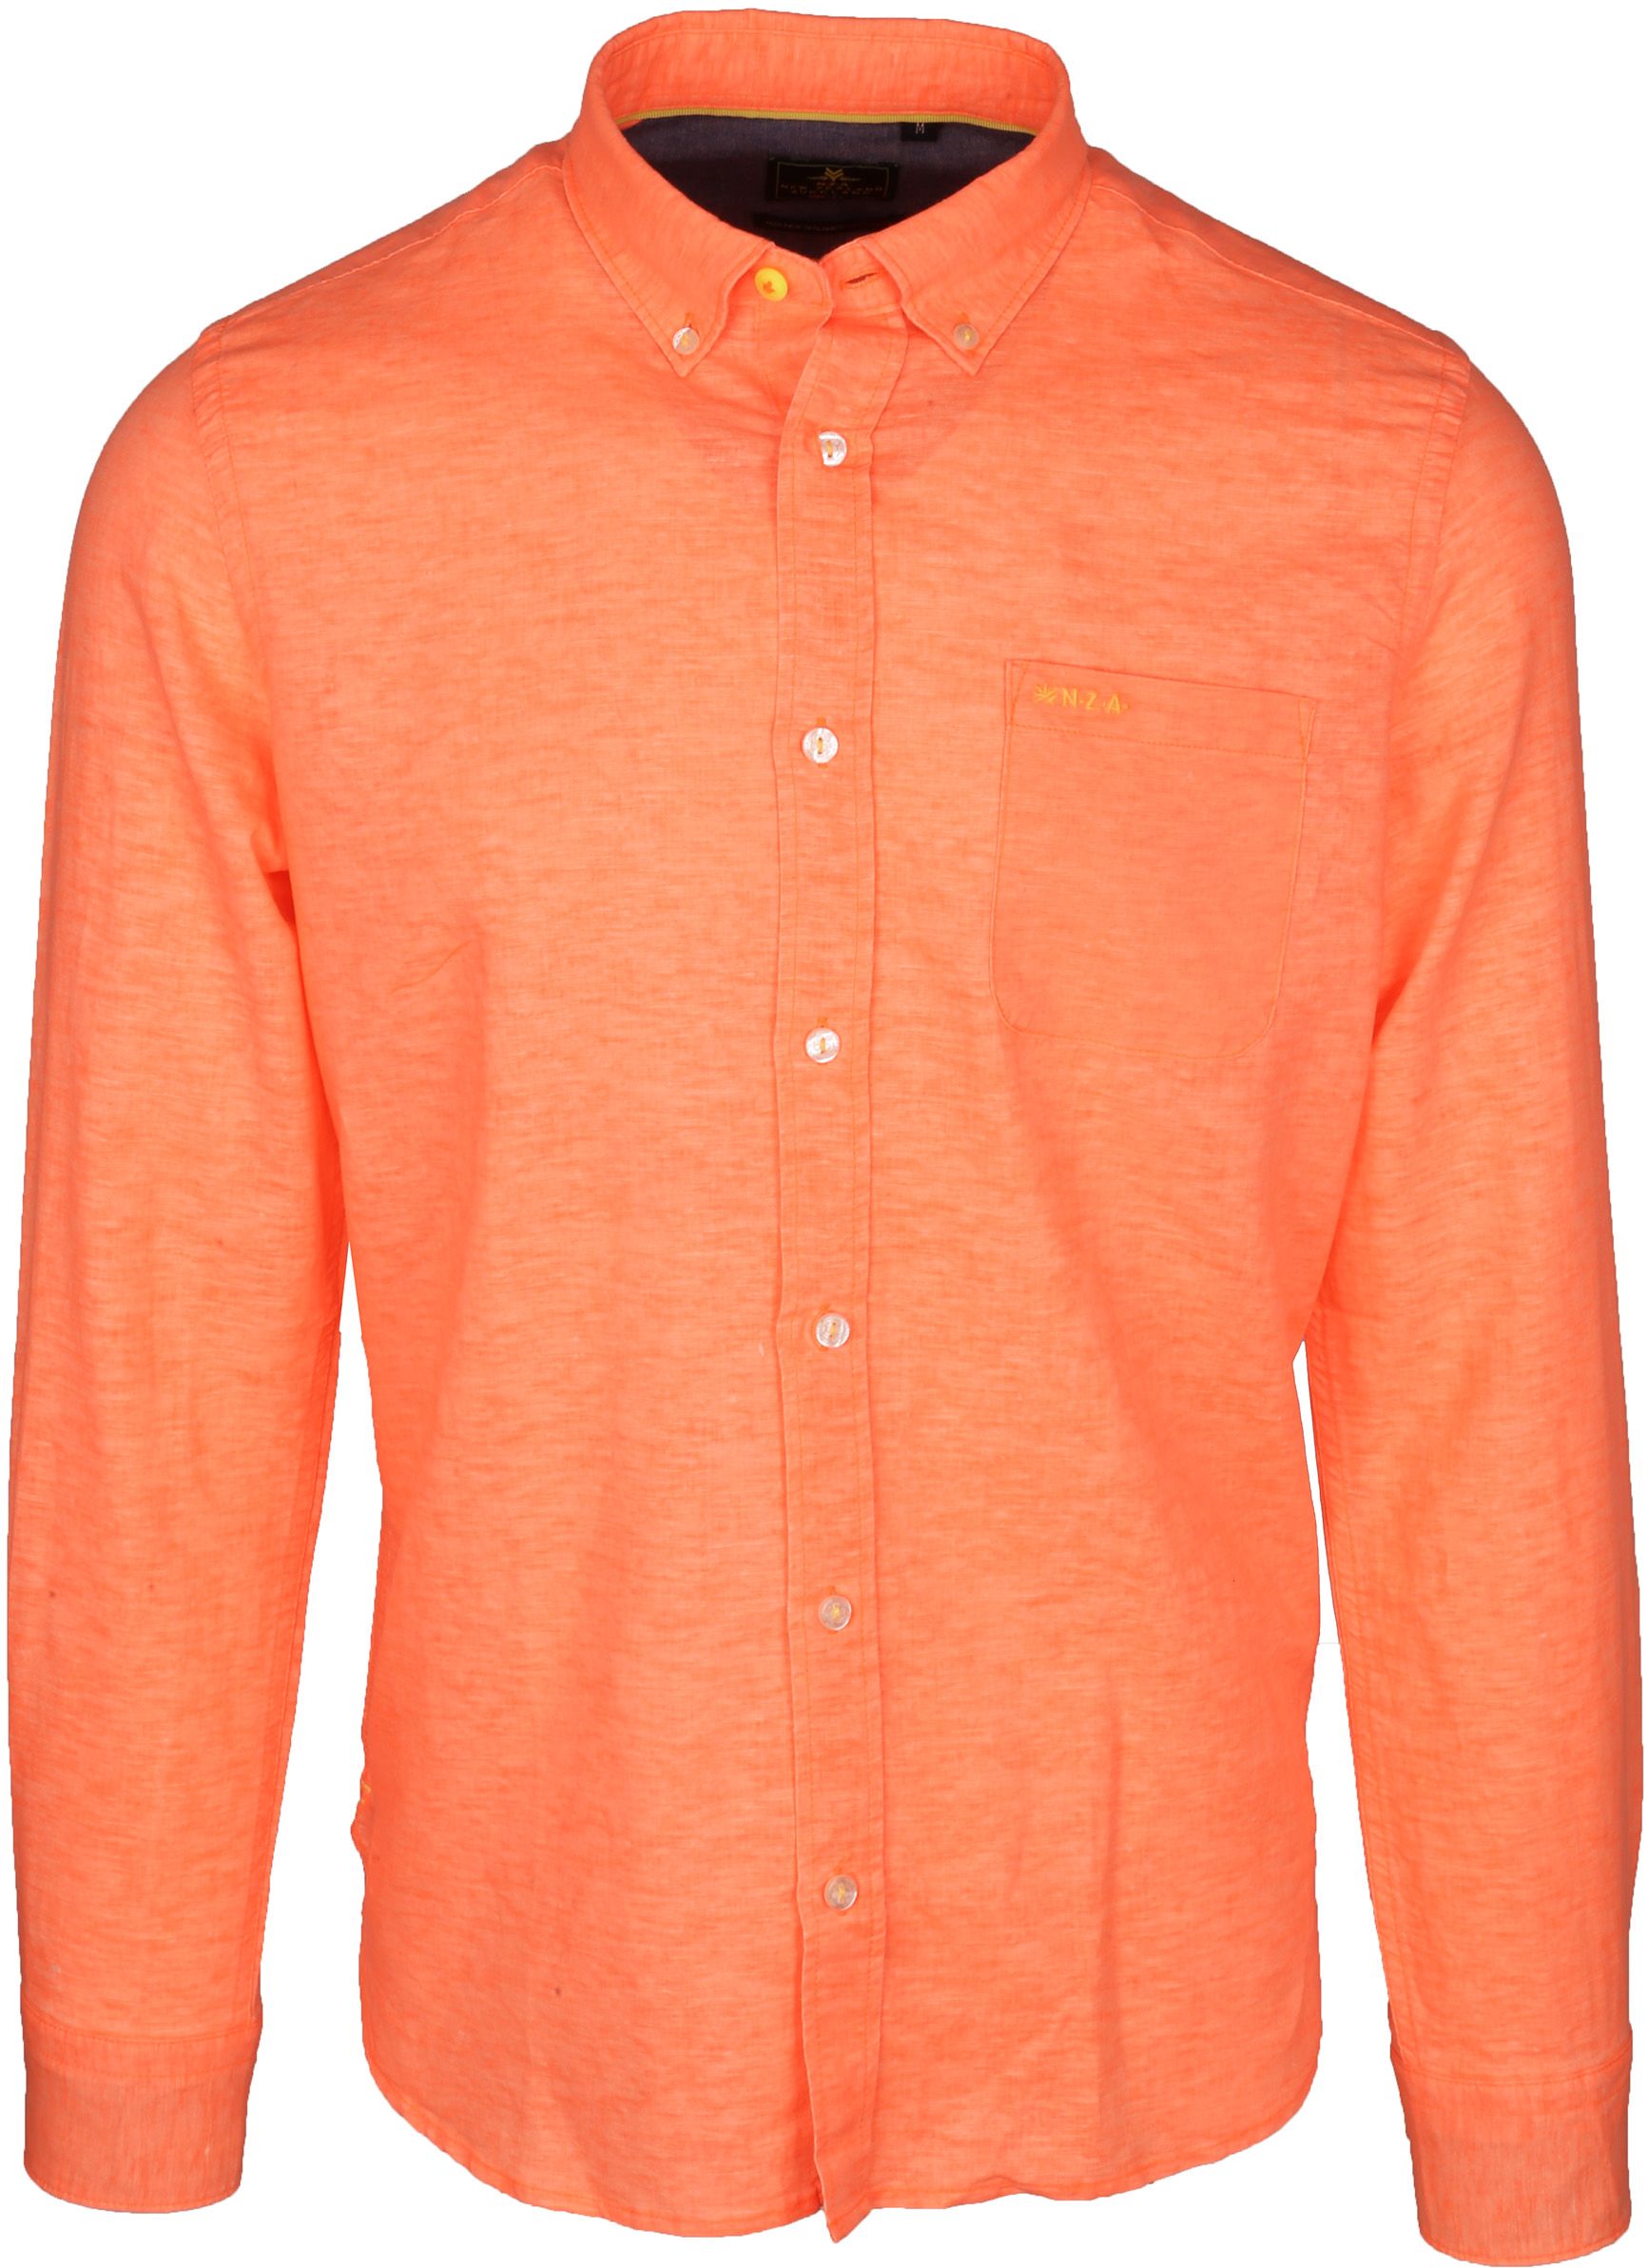 NZA Shirt Snells Beach Bright Orange size 3XL